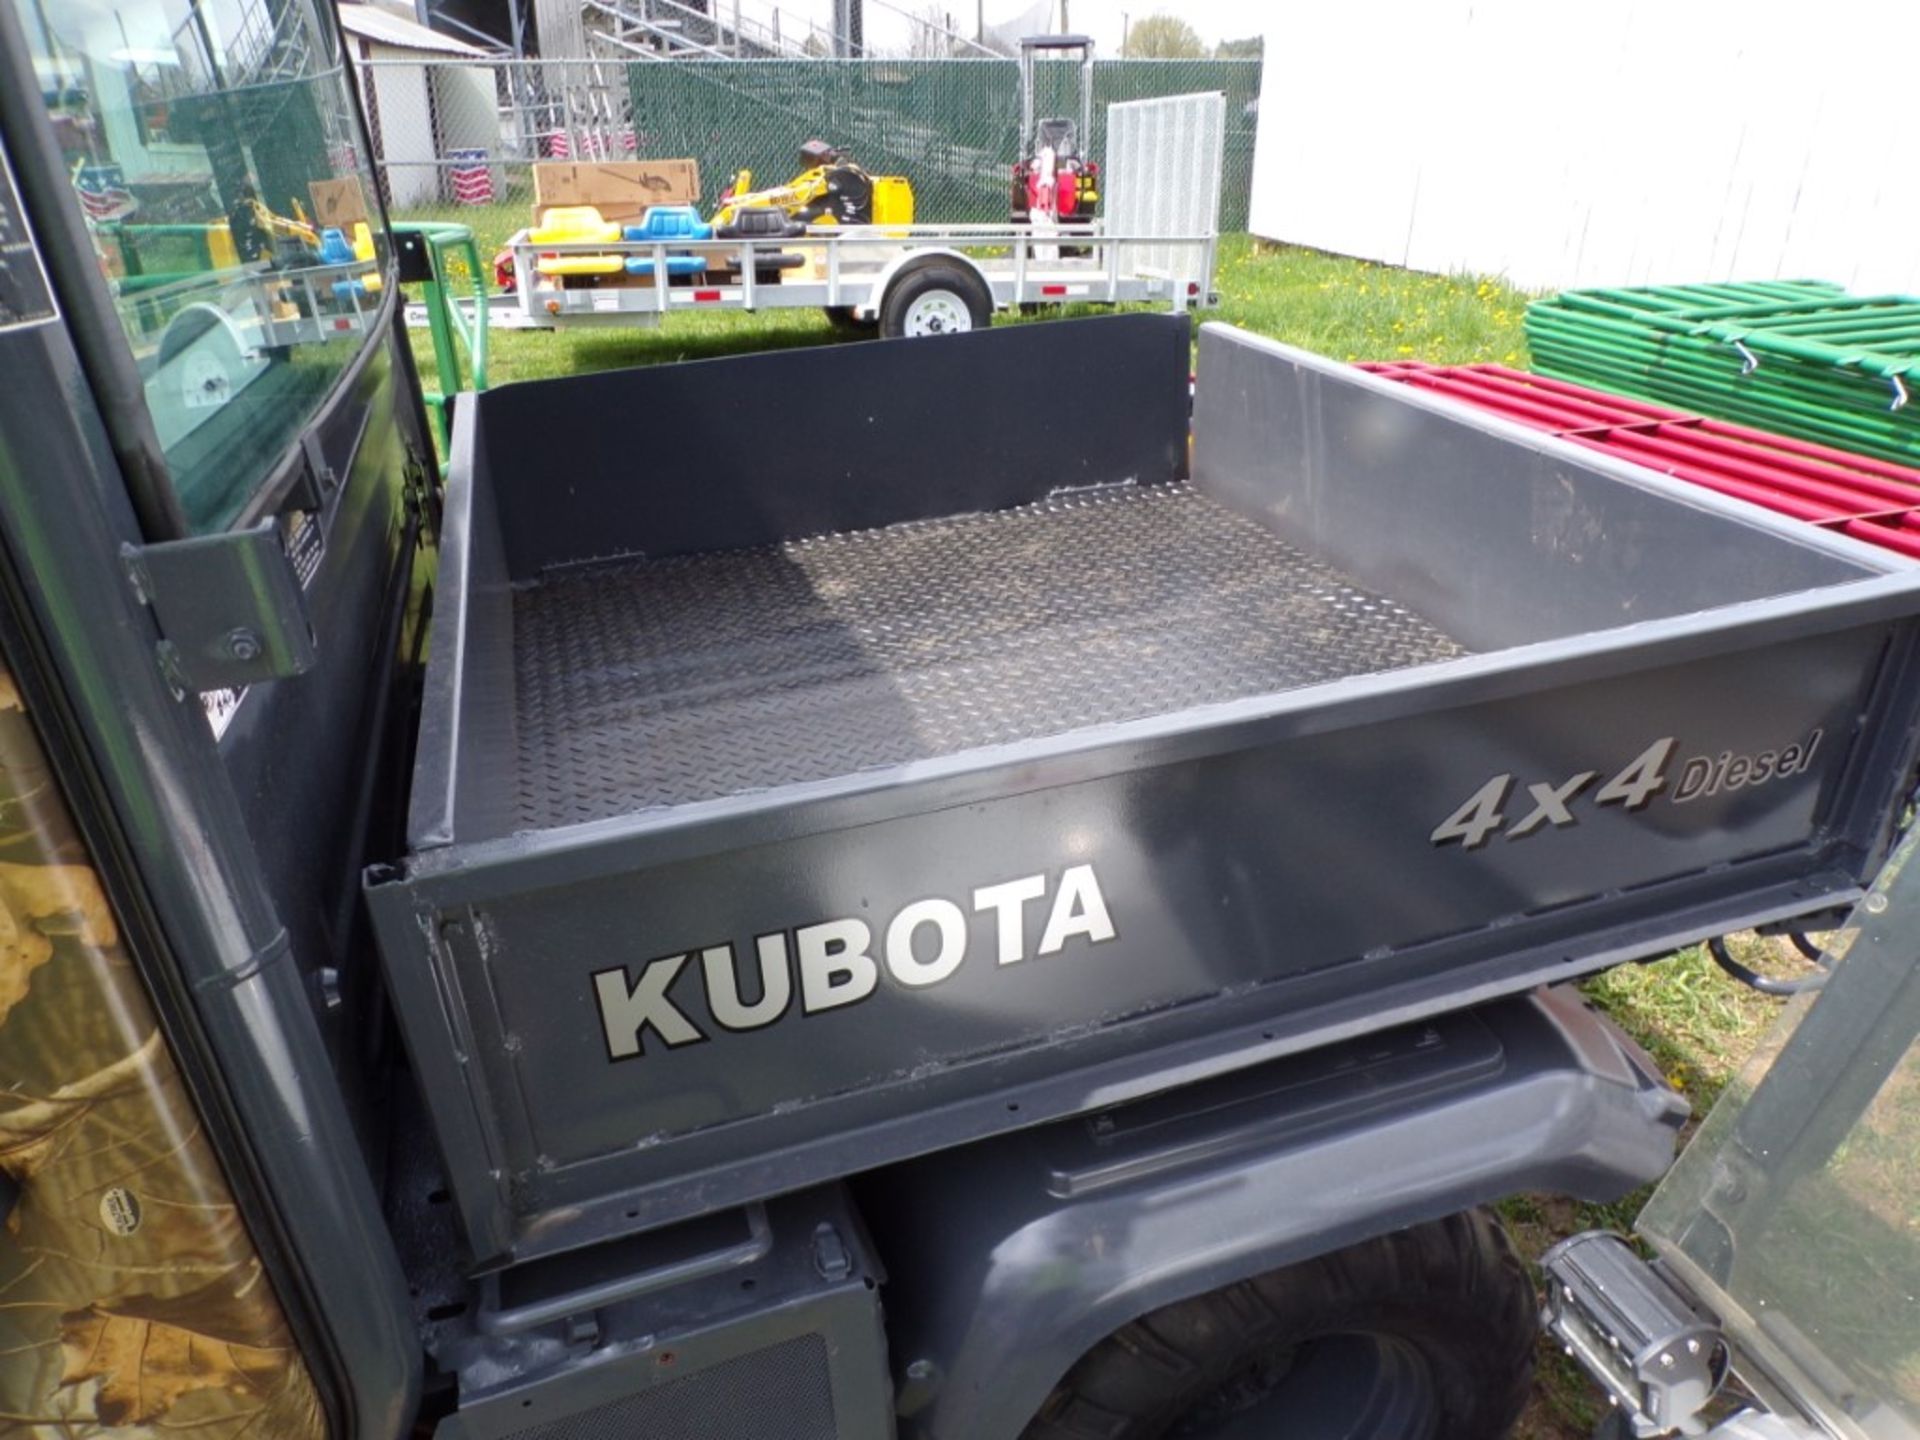 Kubota RTV1100, Dsl., Full Cab w/ Heat & A/C, Power Dump, 3167 Hrs, Nice Shape (5708) - Image 4 of 5